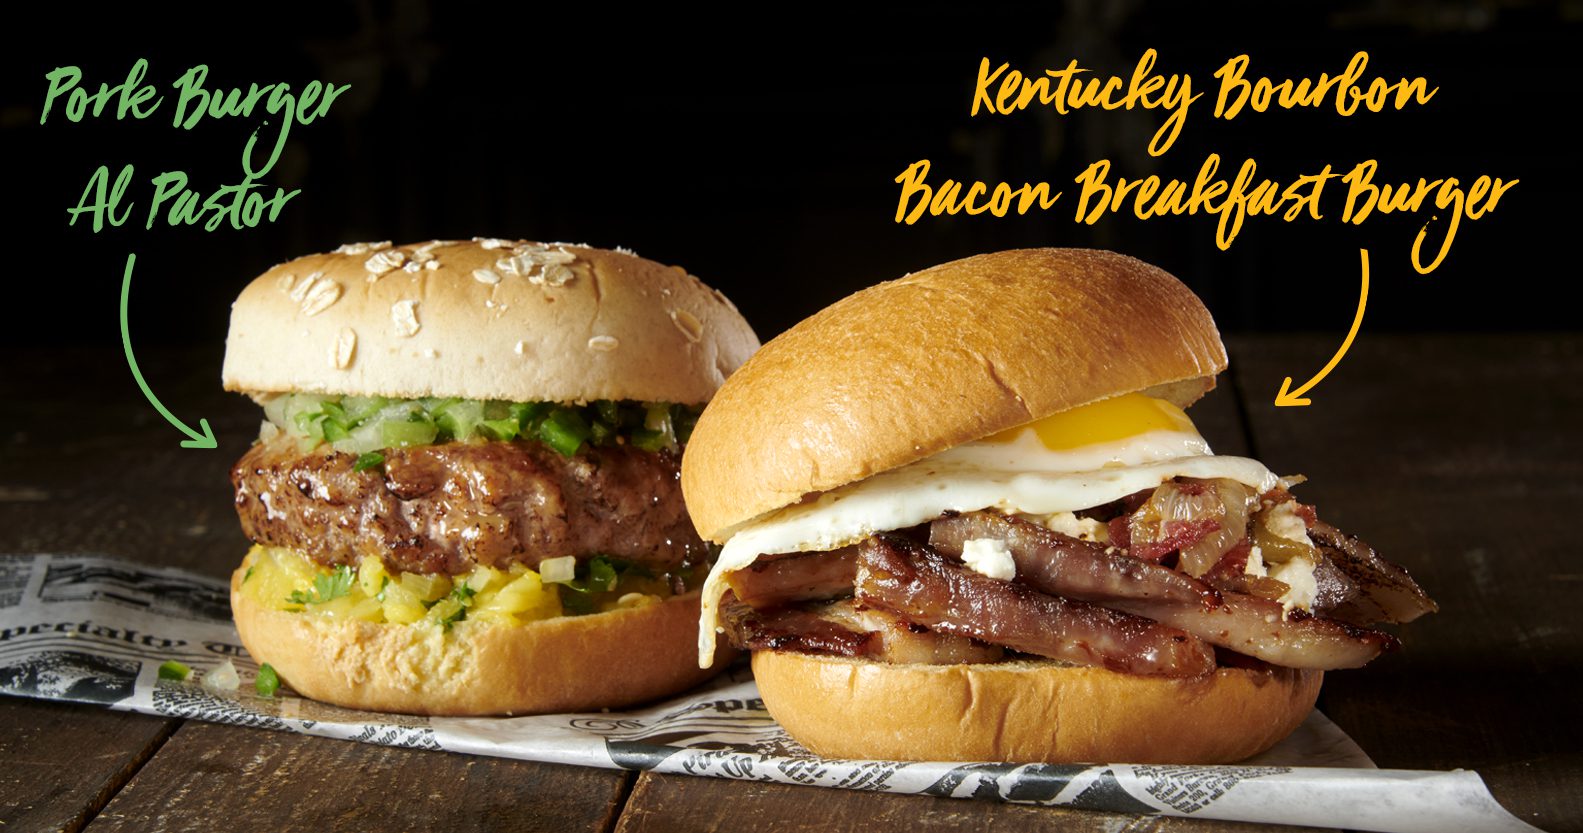 Two alt-burgers: Pork Burger Al Pastor, Kentucky Bourbon Bacon Breakfast Burger